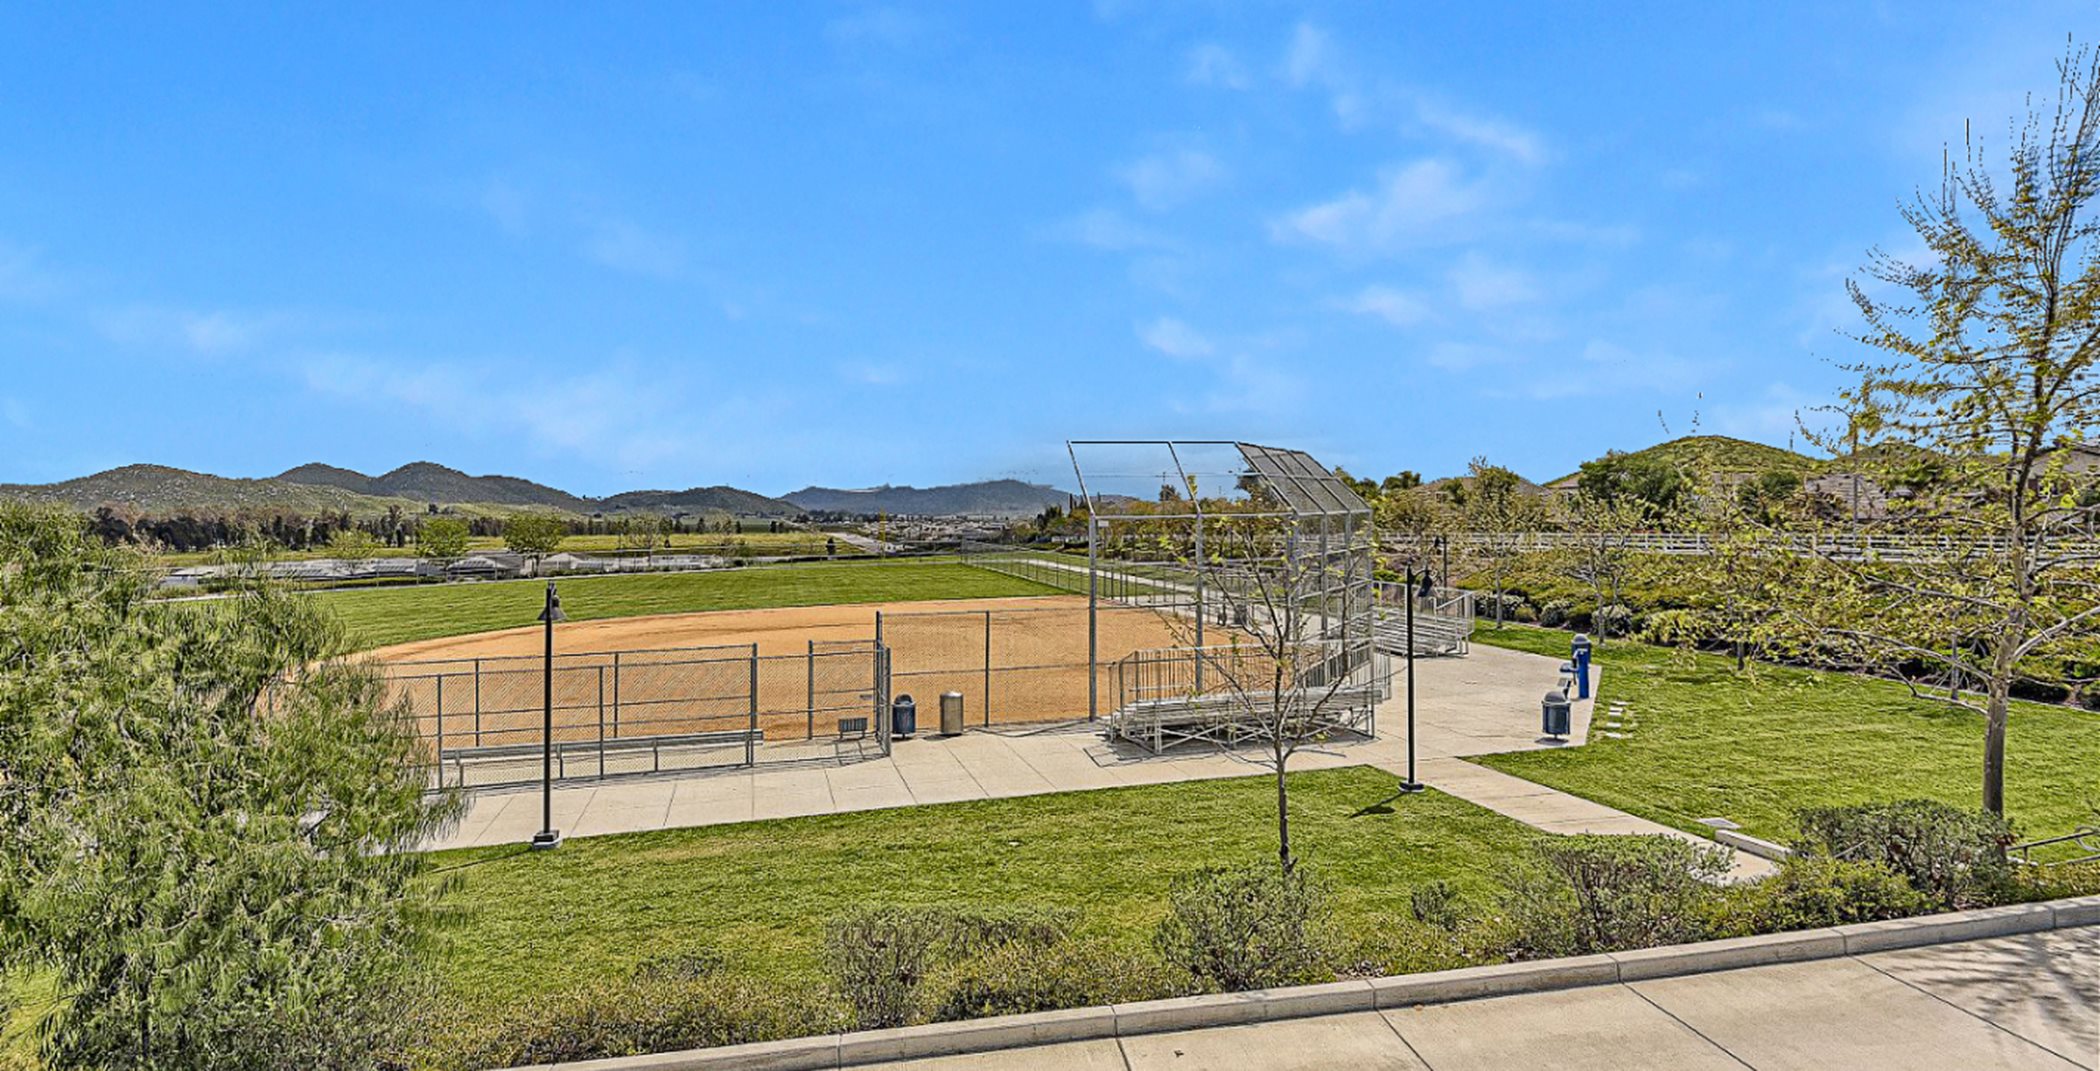 Lago Vista Sports Park baseball diamond